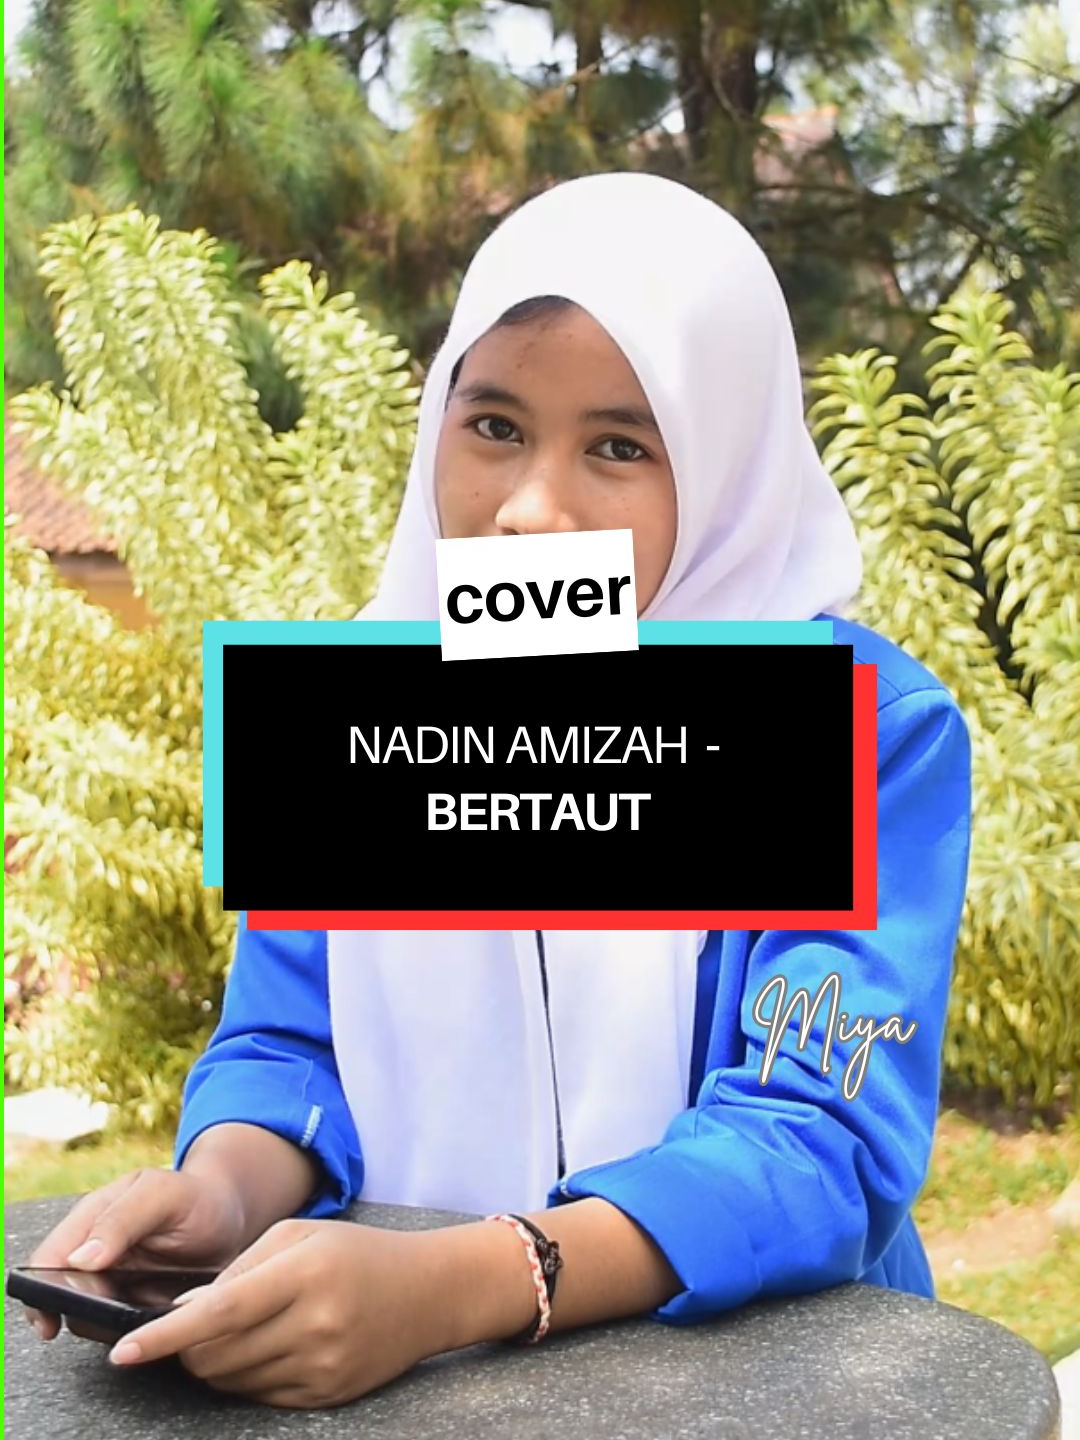 Cover Nadin Amizah - Bertaut @miyaaw_14 #fypシ゚ #fypシ゚viral #fypage #fyppppppppppppppppppppppp #fyp #fypp